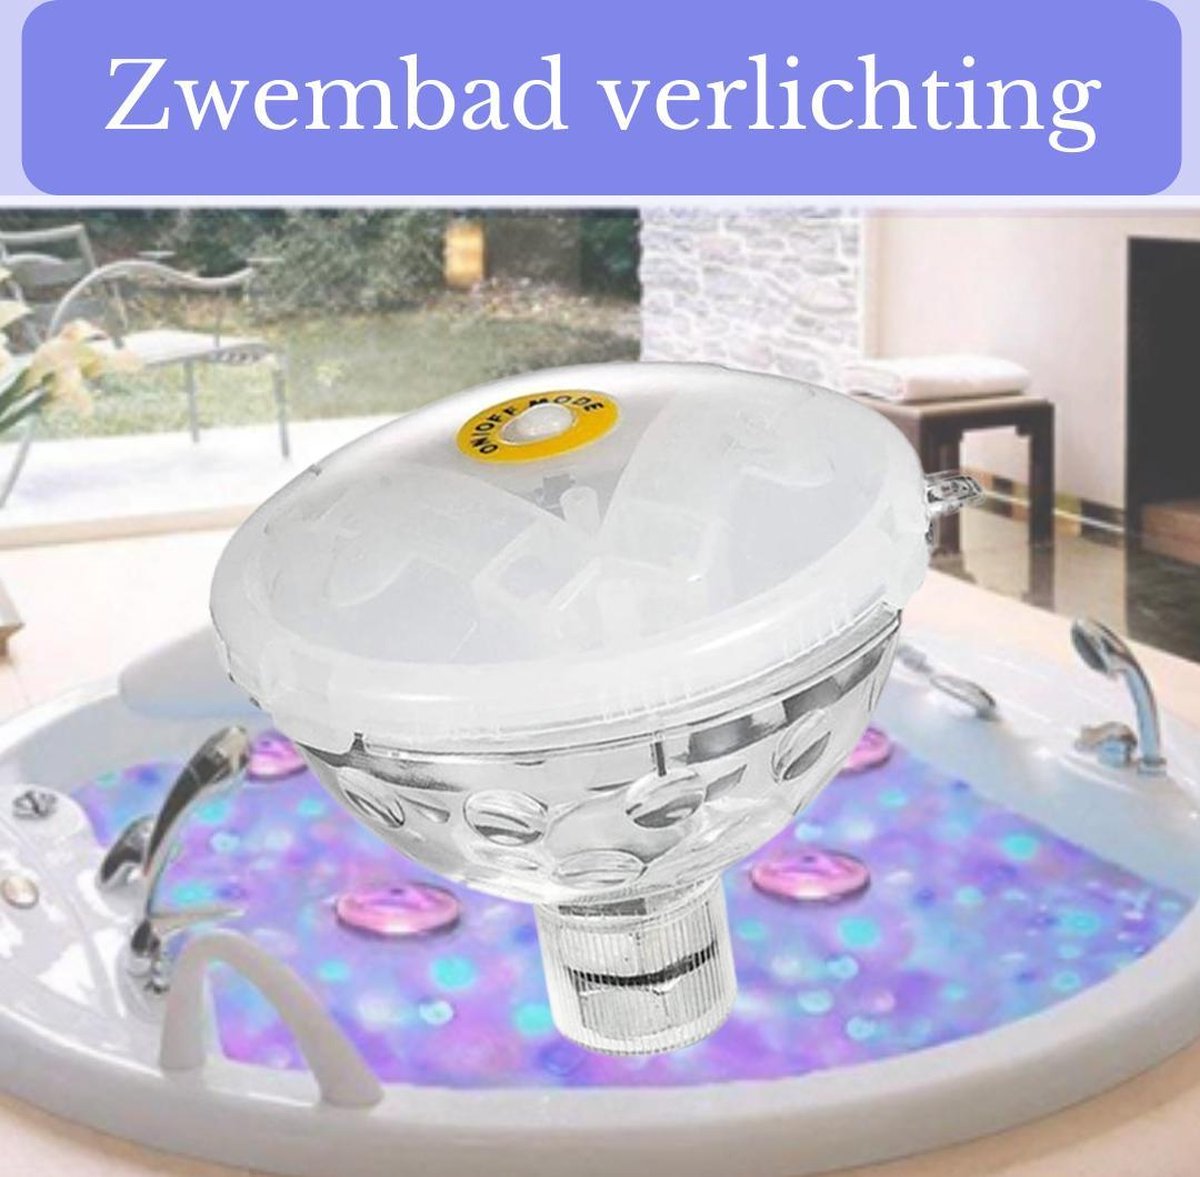 Zwembadverlichting - Drijvende verlichting - Zwembadlamp - Onderwater verlichting - Jacuzzi verlichting